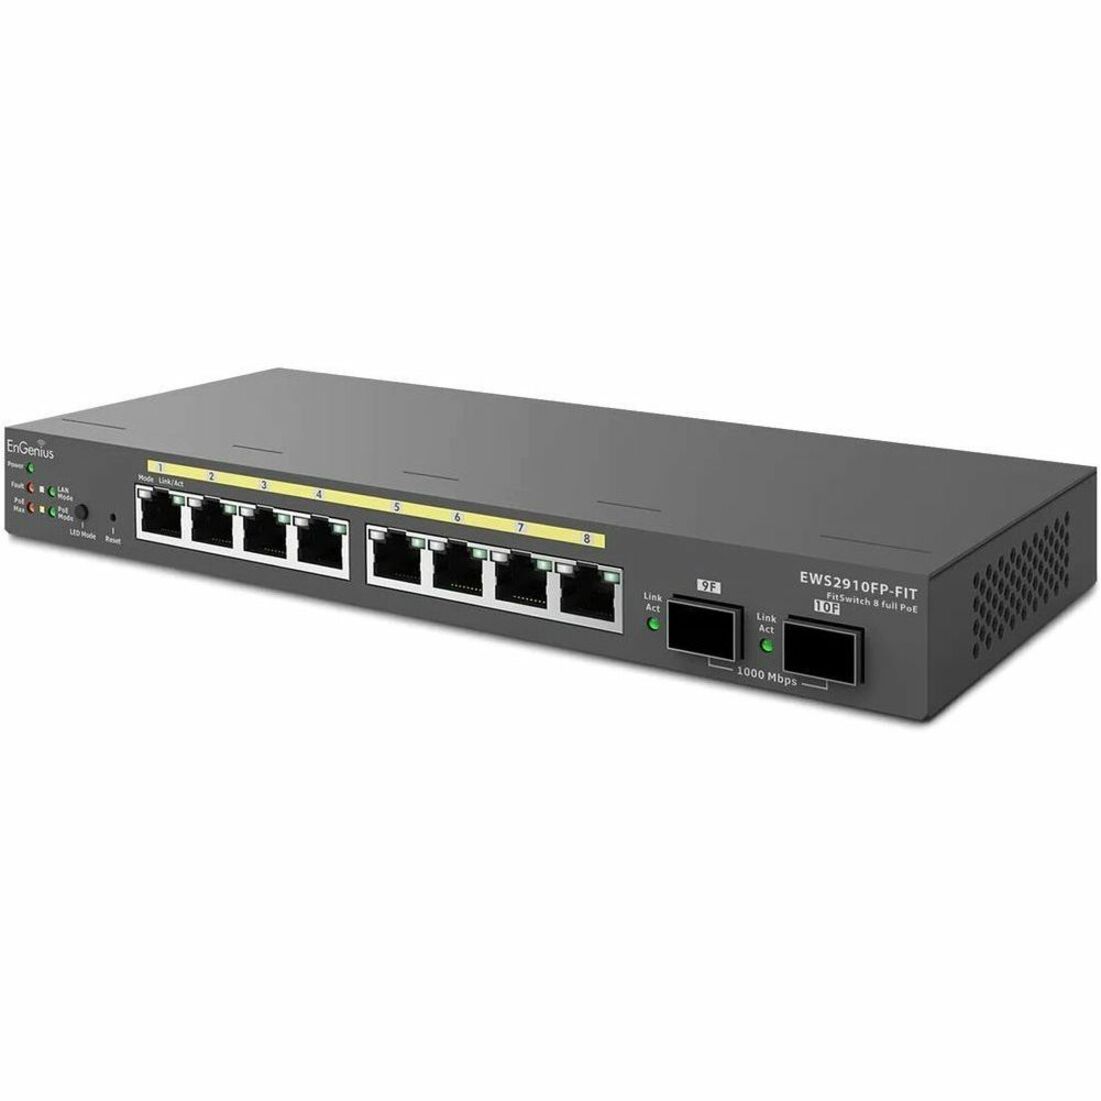 EnGenius EWS2910FP-FIT Ethernet Switch, Business Network Switch with 8 Gigabit Ethernet PoE Ports, 2 Gigabit Ethernet Expansion Slots